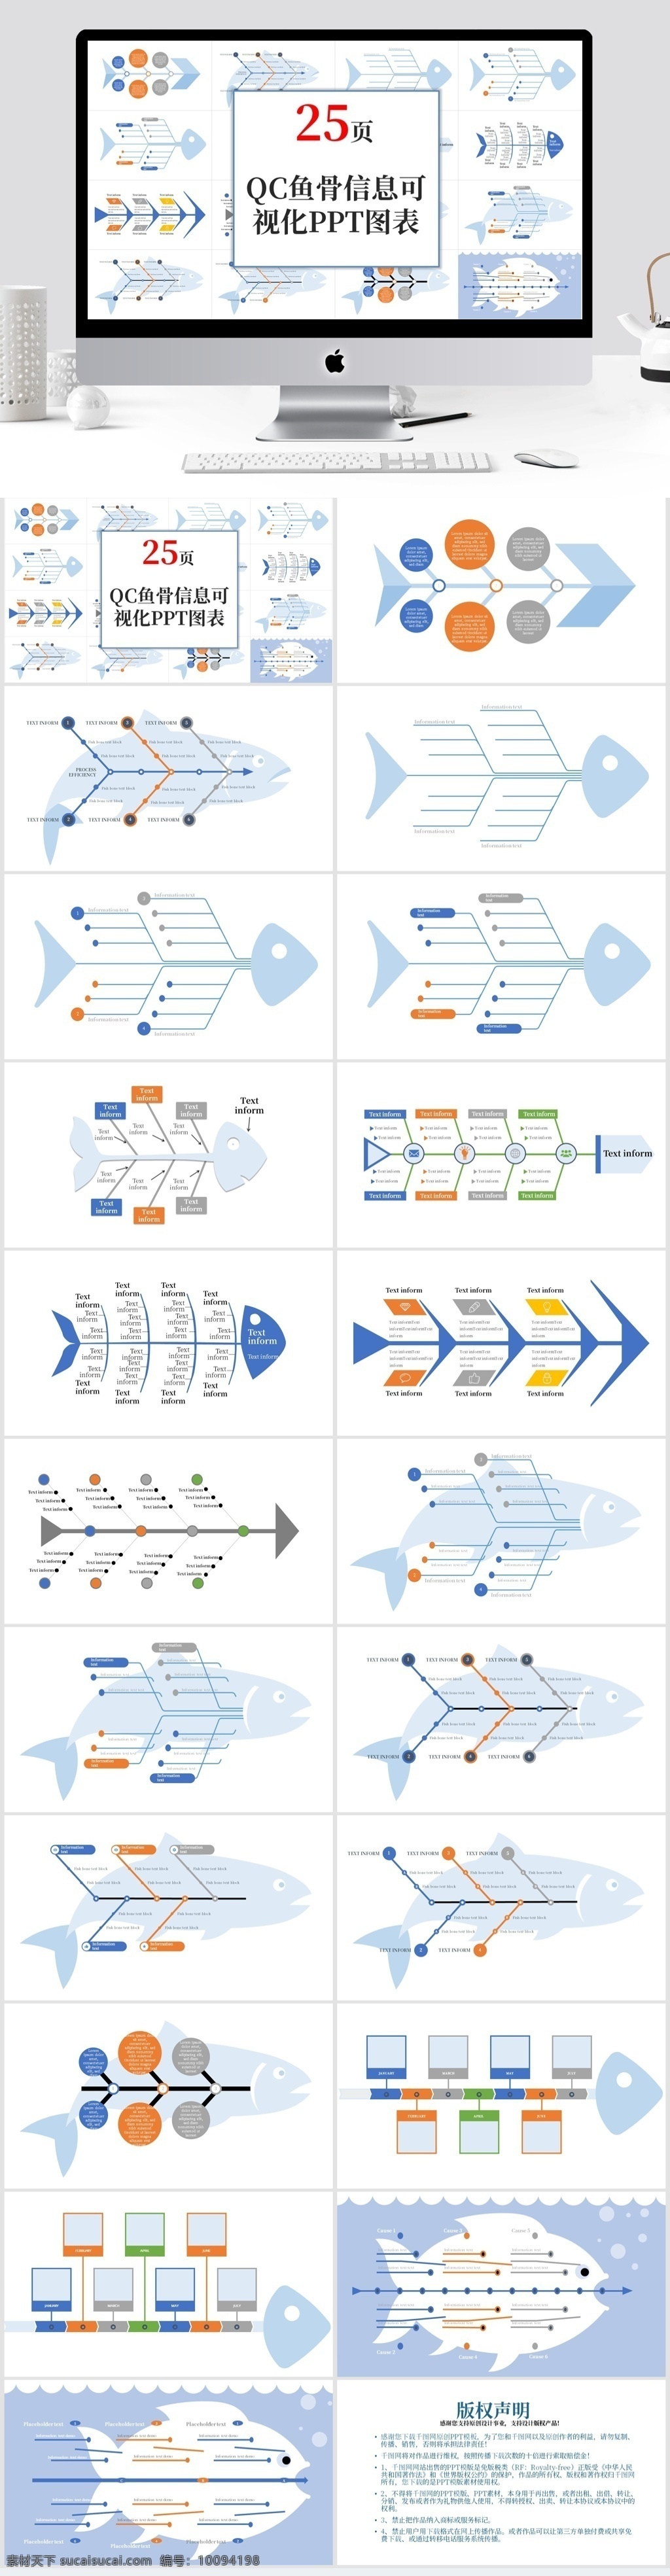 qc 鱼骨 流程 并列 信息 可视化 图表 ppt图表